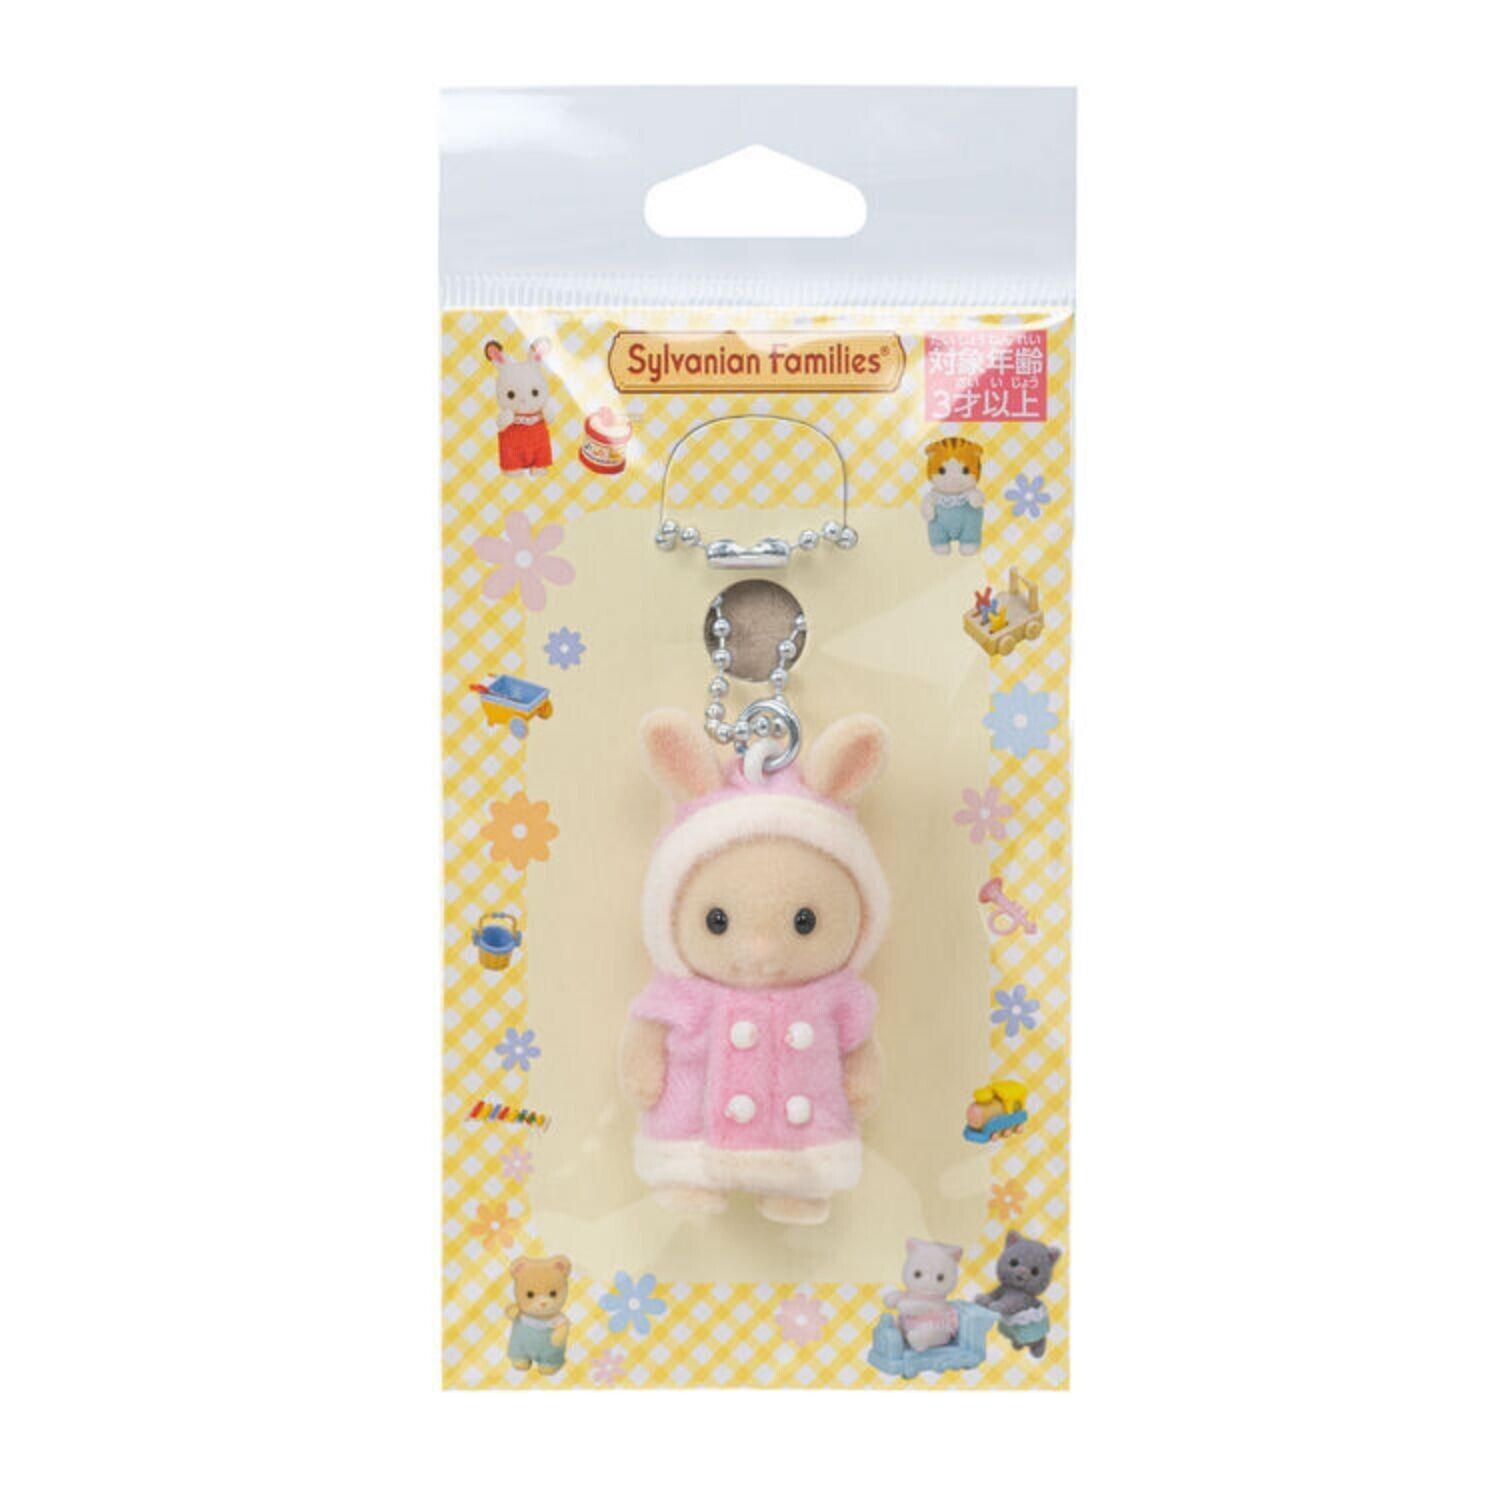 Sylvanian Families Doll milk rabbit keychain B Calico Critters Figure toy Japan